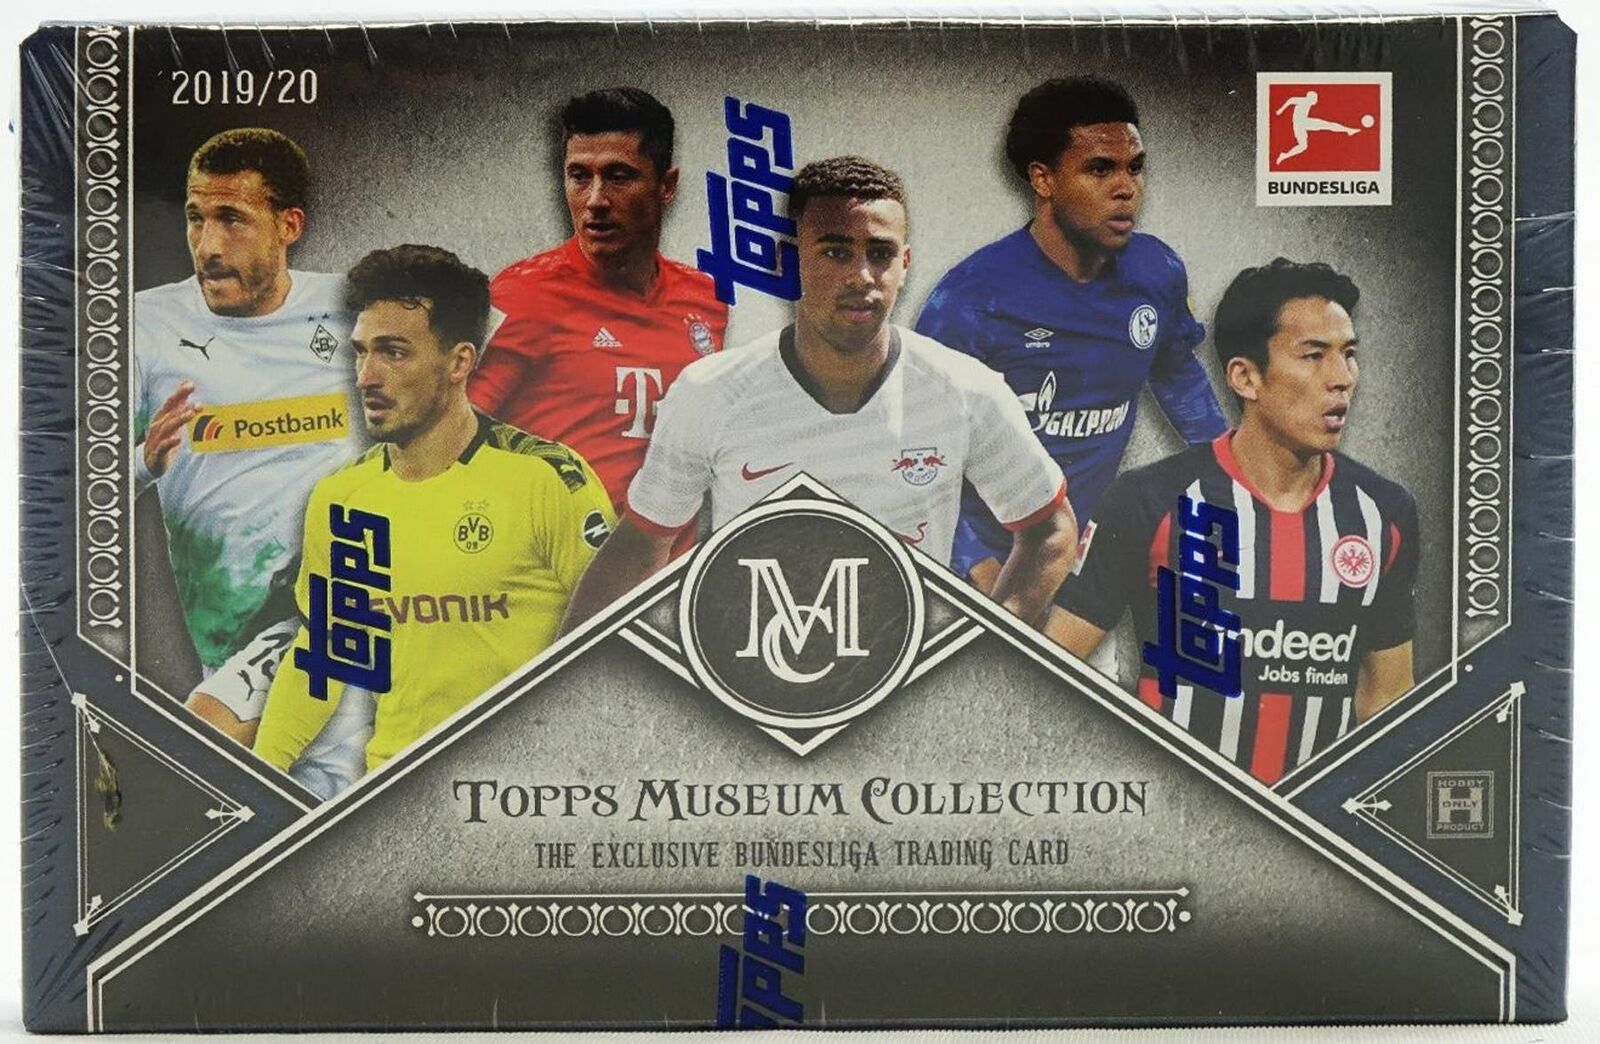 2019-20 Topps Museum Collection Bundesliga Soccer Hobby Box - 2019 